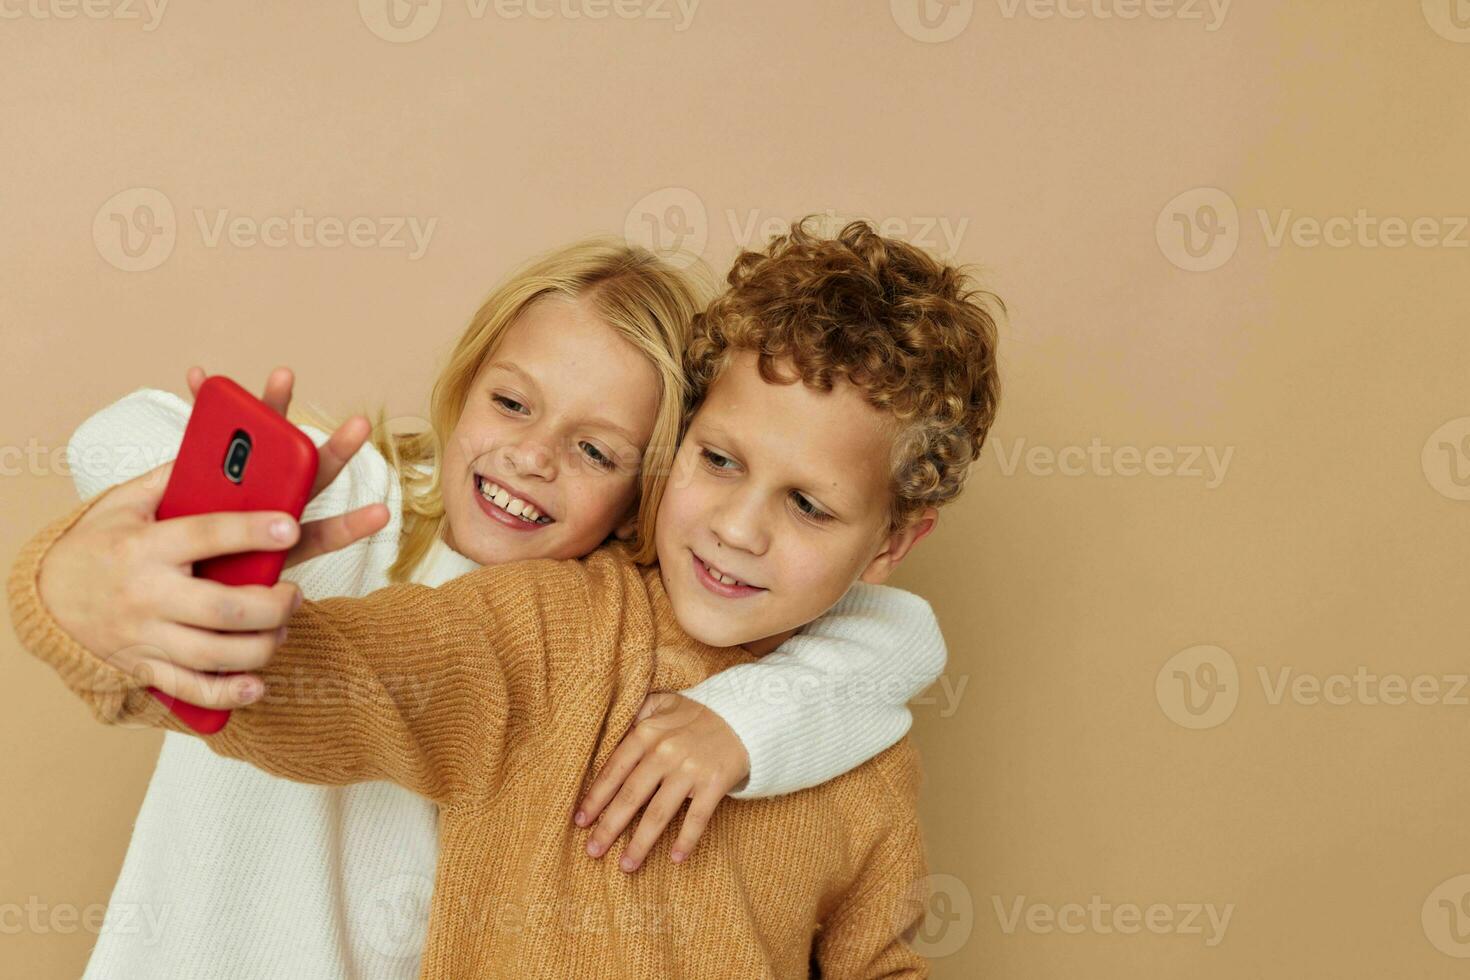 Little boy and girl hug entertainment selfie posing friendship childhood unaltered photo